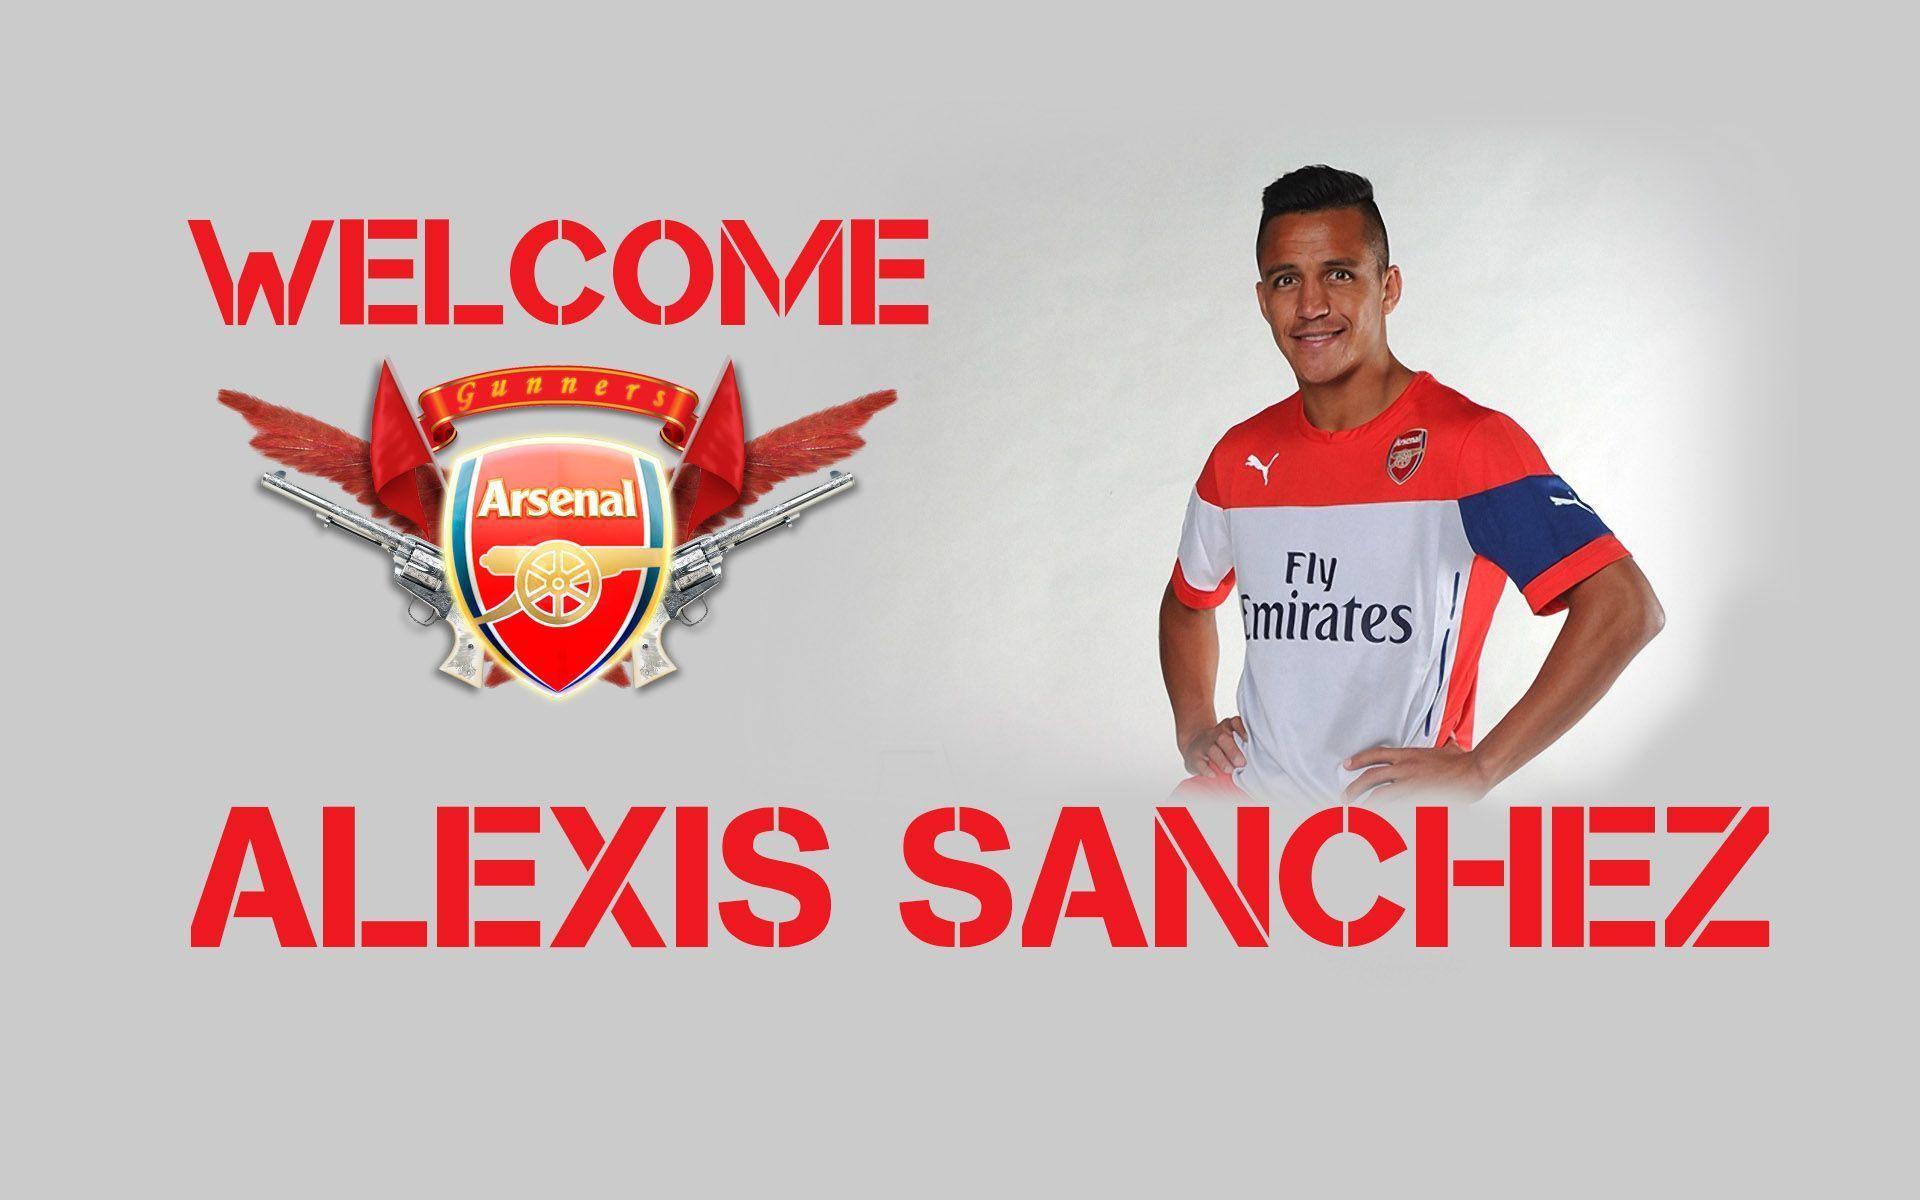 Alexis Sanchez Arsenal FC 2014 -15 Puma Shirt Wallpaper Wide or HD